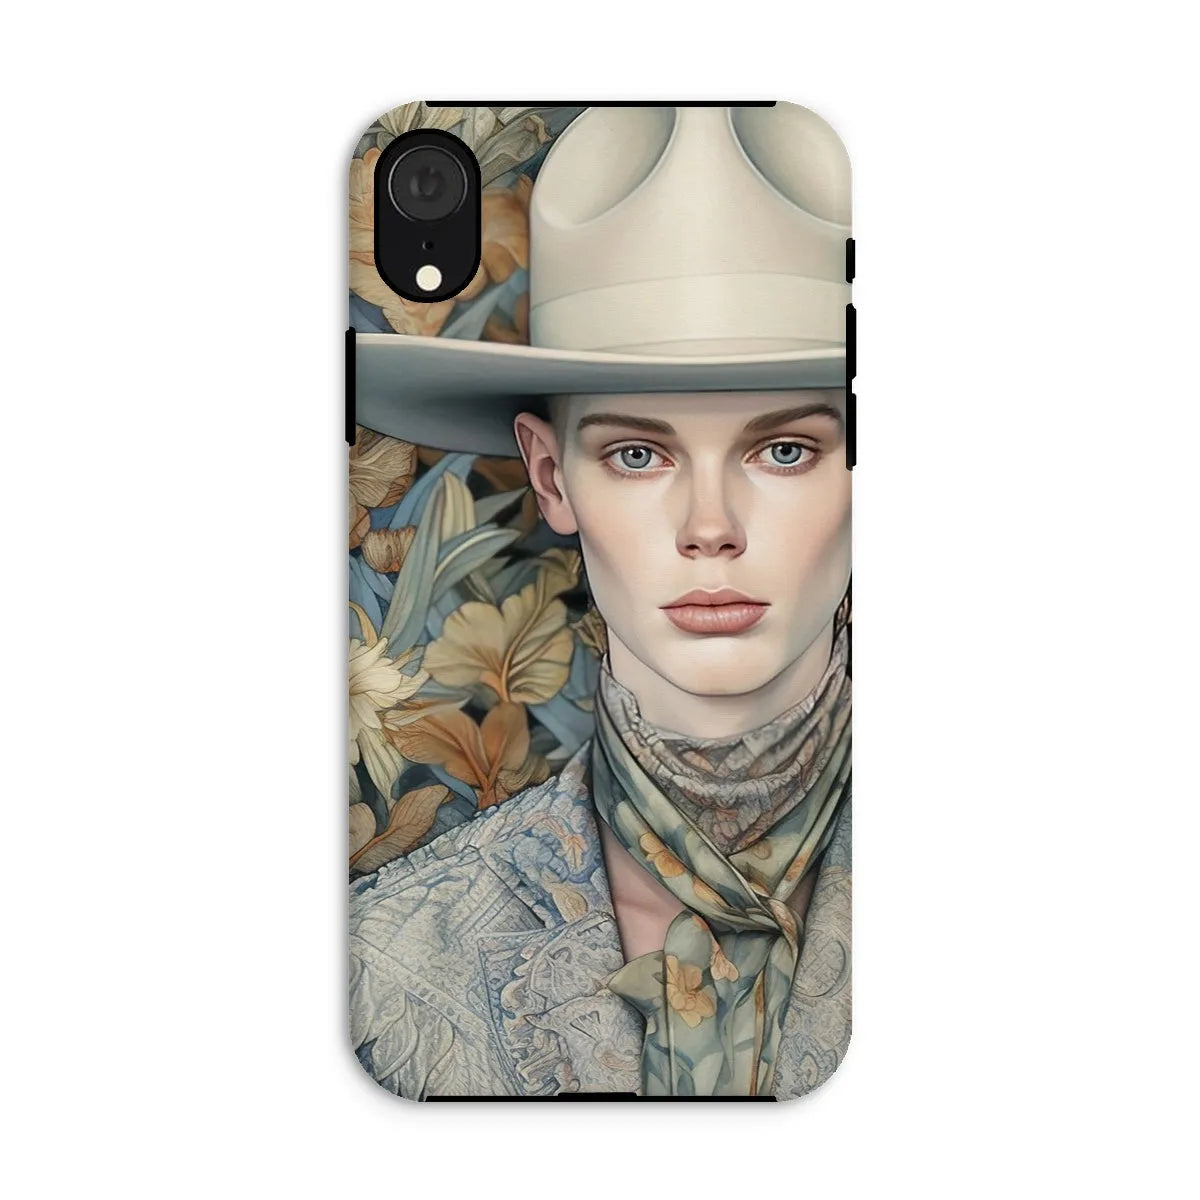 Jasper - Dandy Twink Cowboy Aesthetic Art Phone Case - Iphone Xr / Matte - Mobile Phone Cases - Aesthetic Art